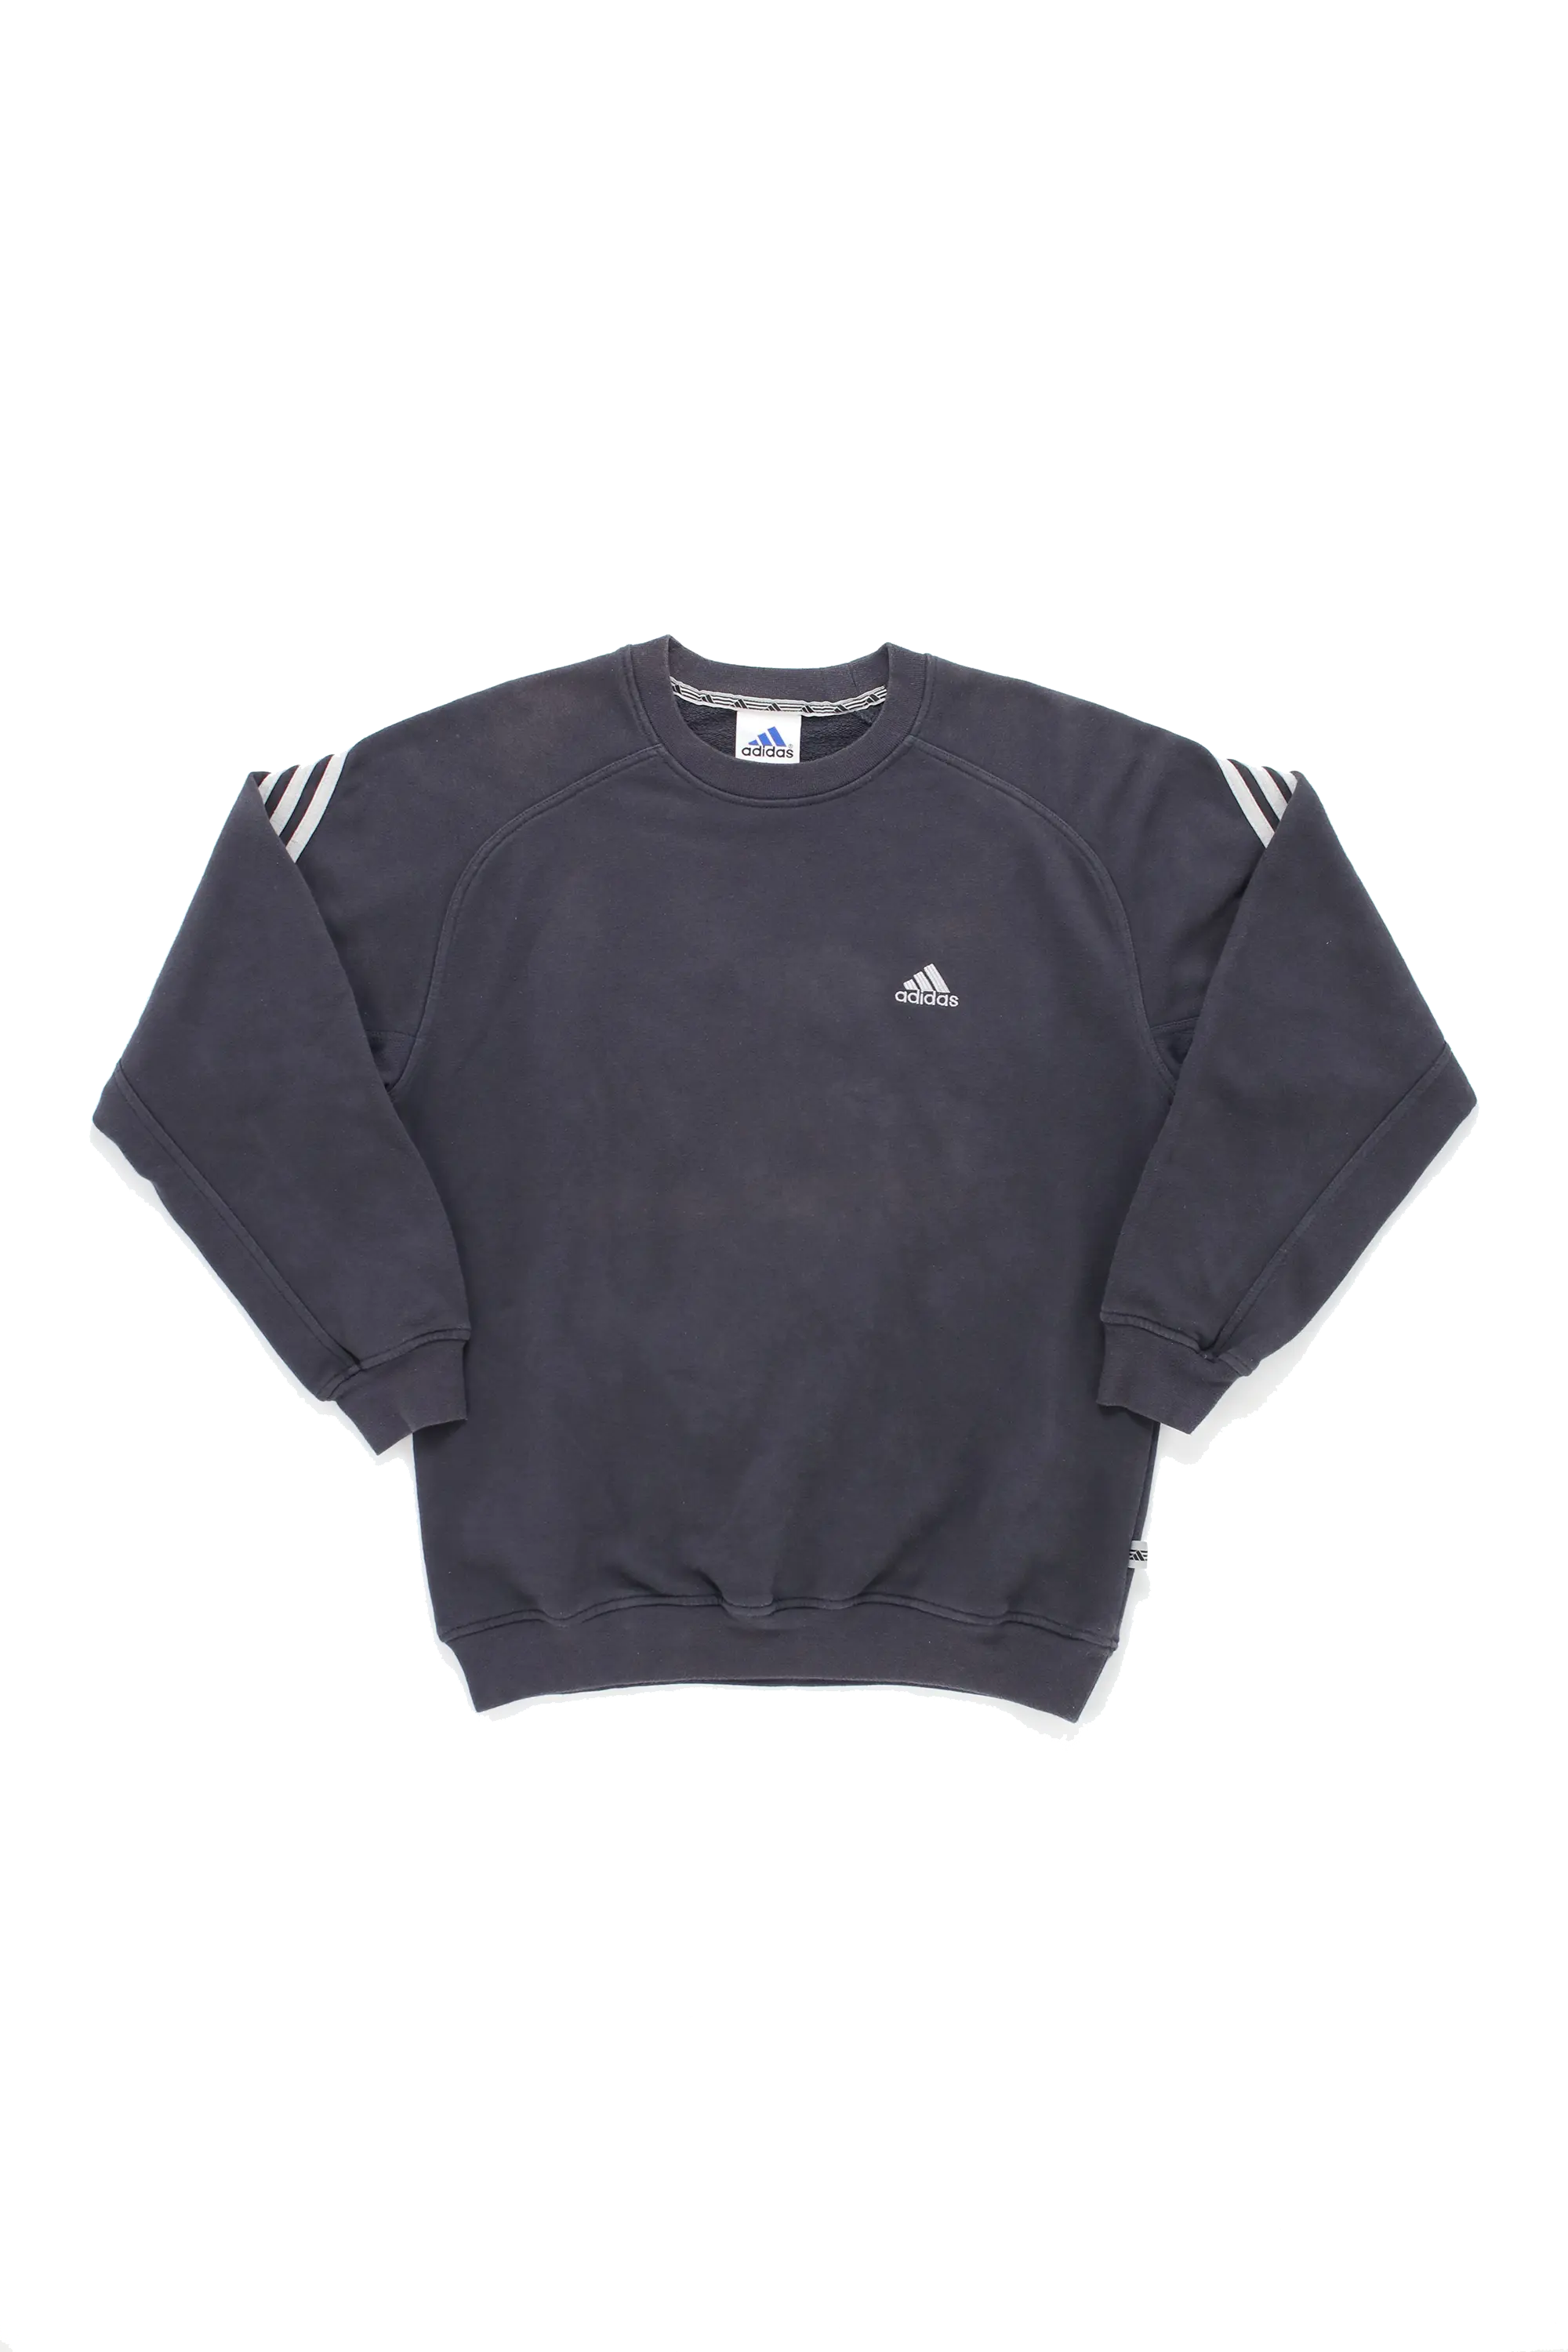 Adidas TransAlp Sweater